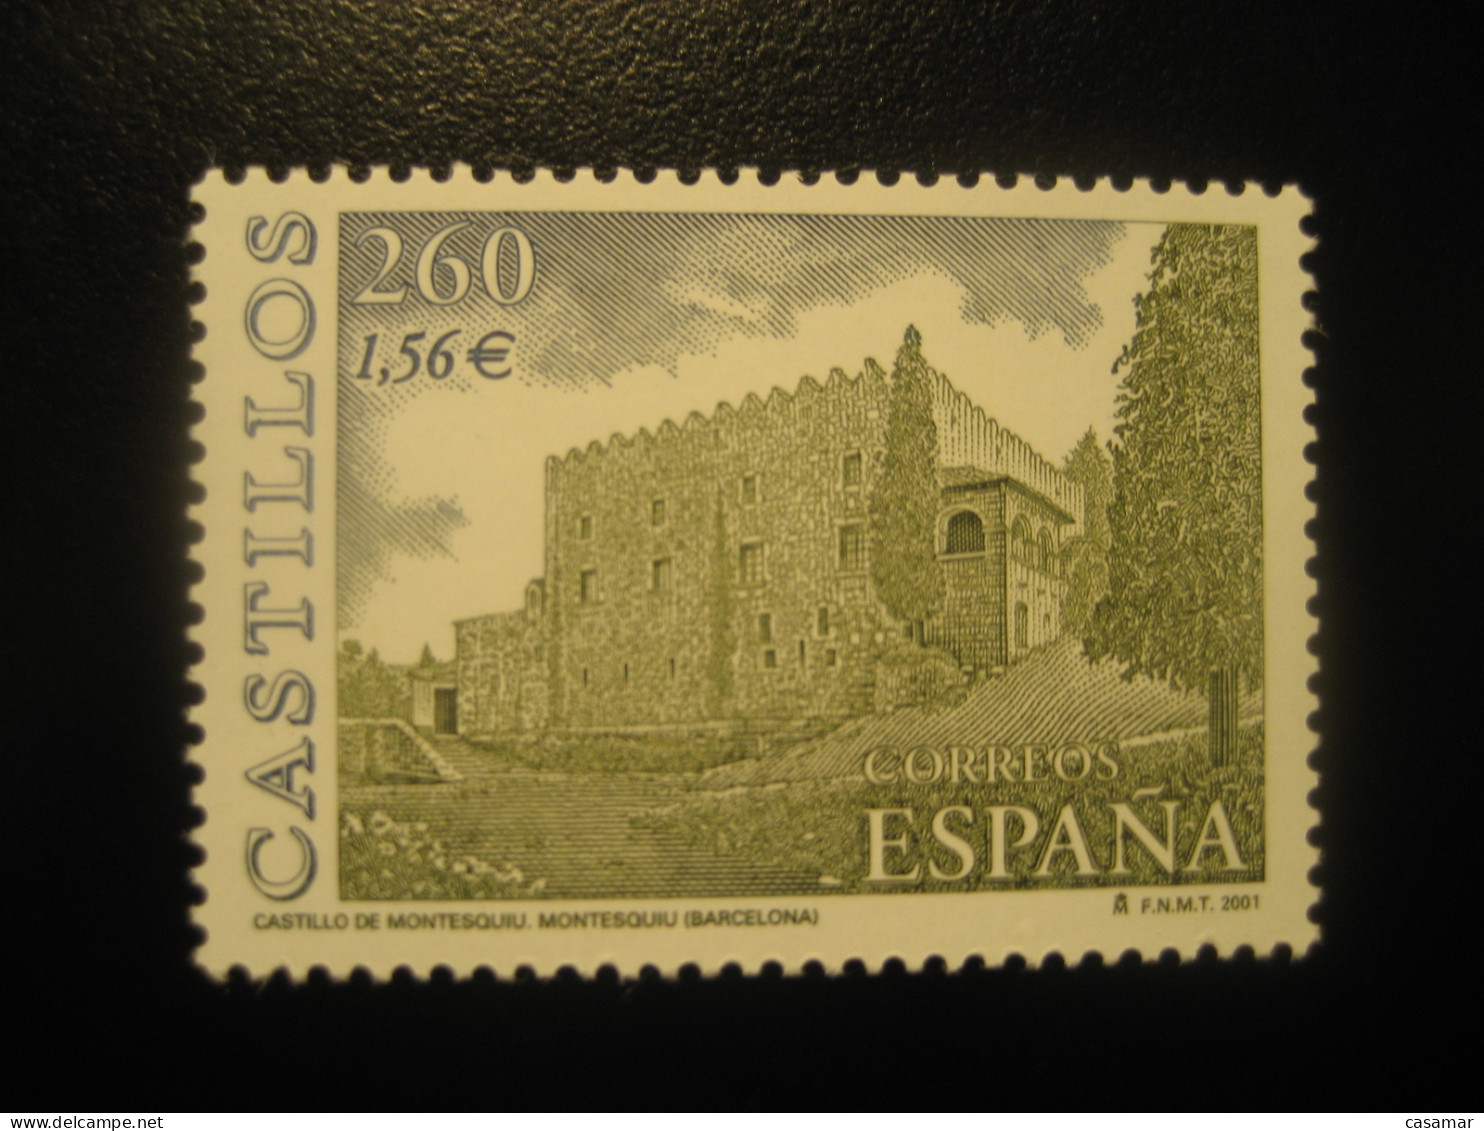 Edifil 3788 ** Unhinged Facial 1,56 Eur Stamp 2001 MONTESQUIU Barcelona Castle Chateau Castillo SPAIN - Kastelen